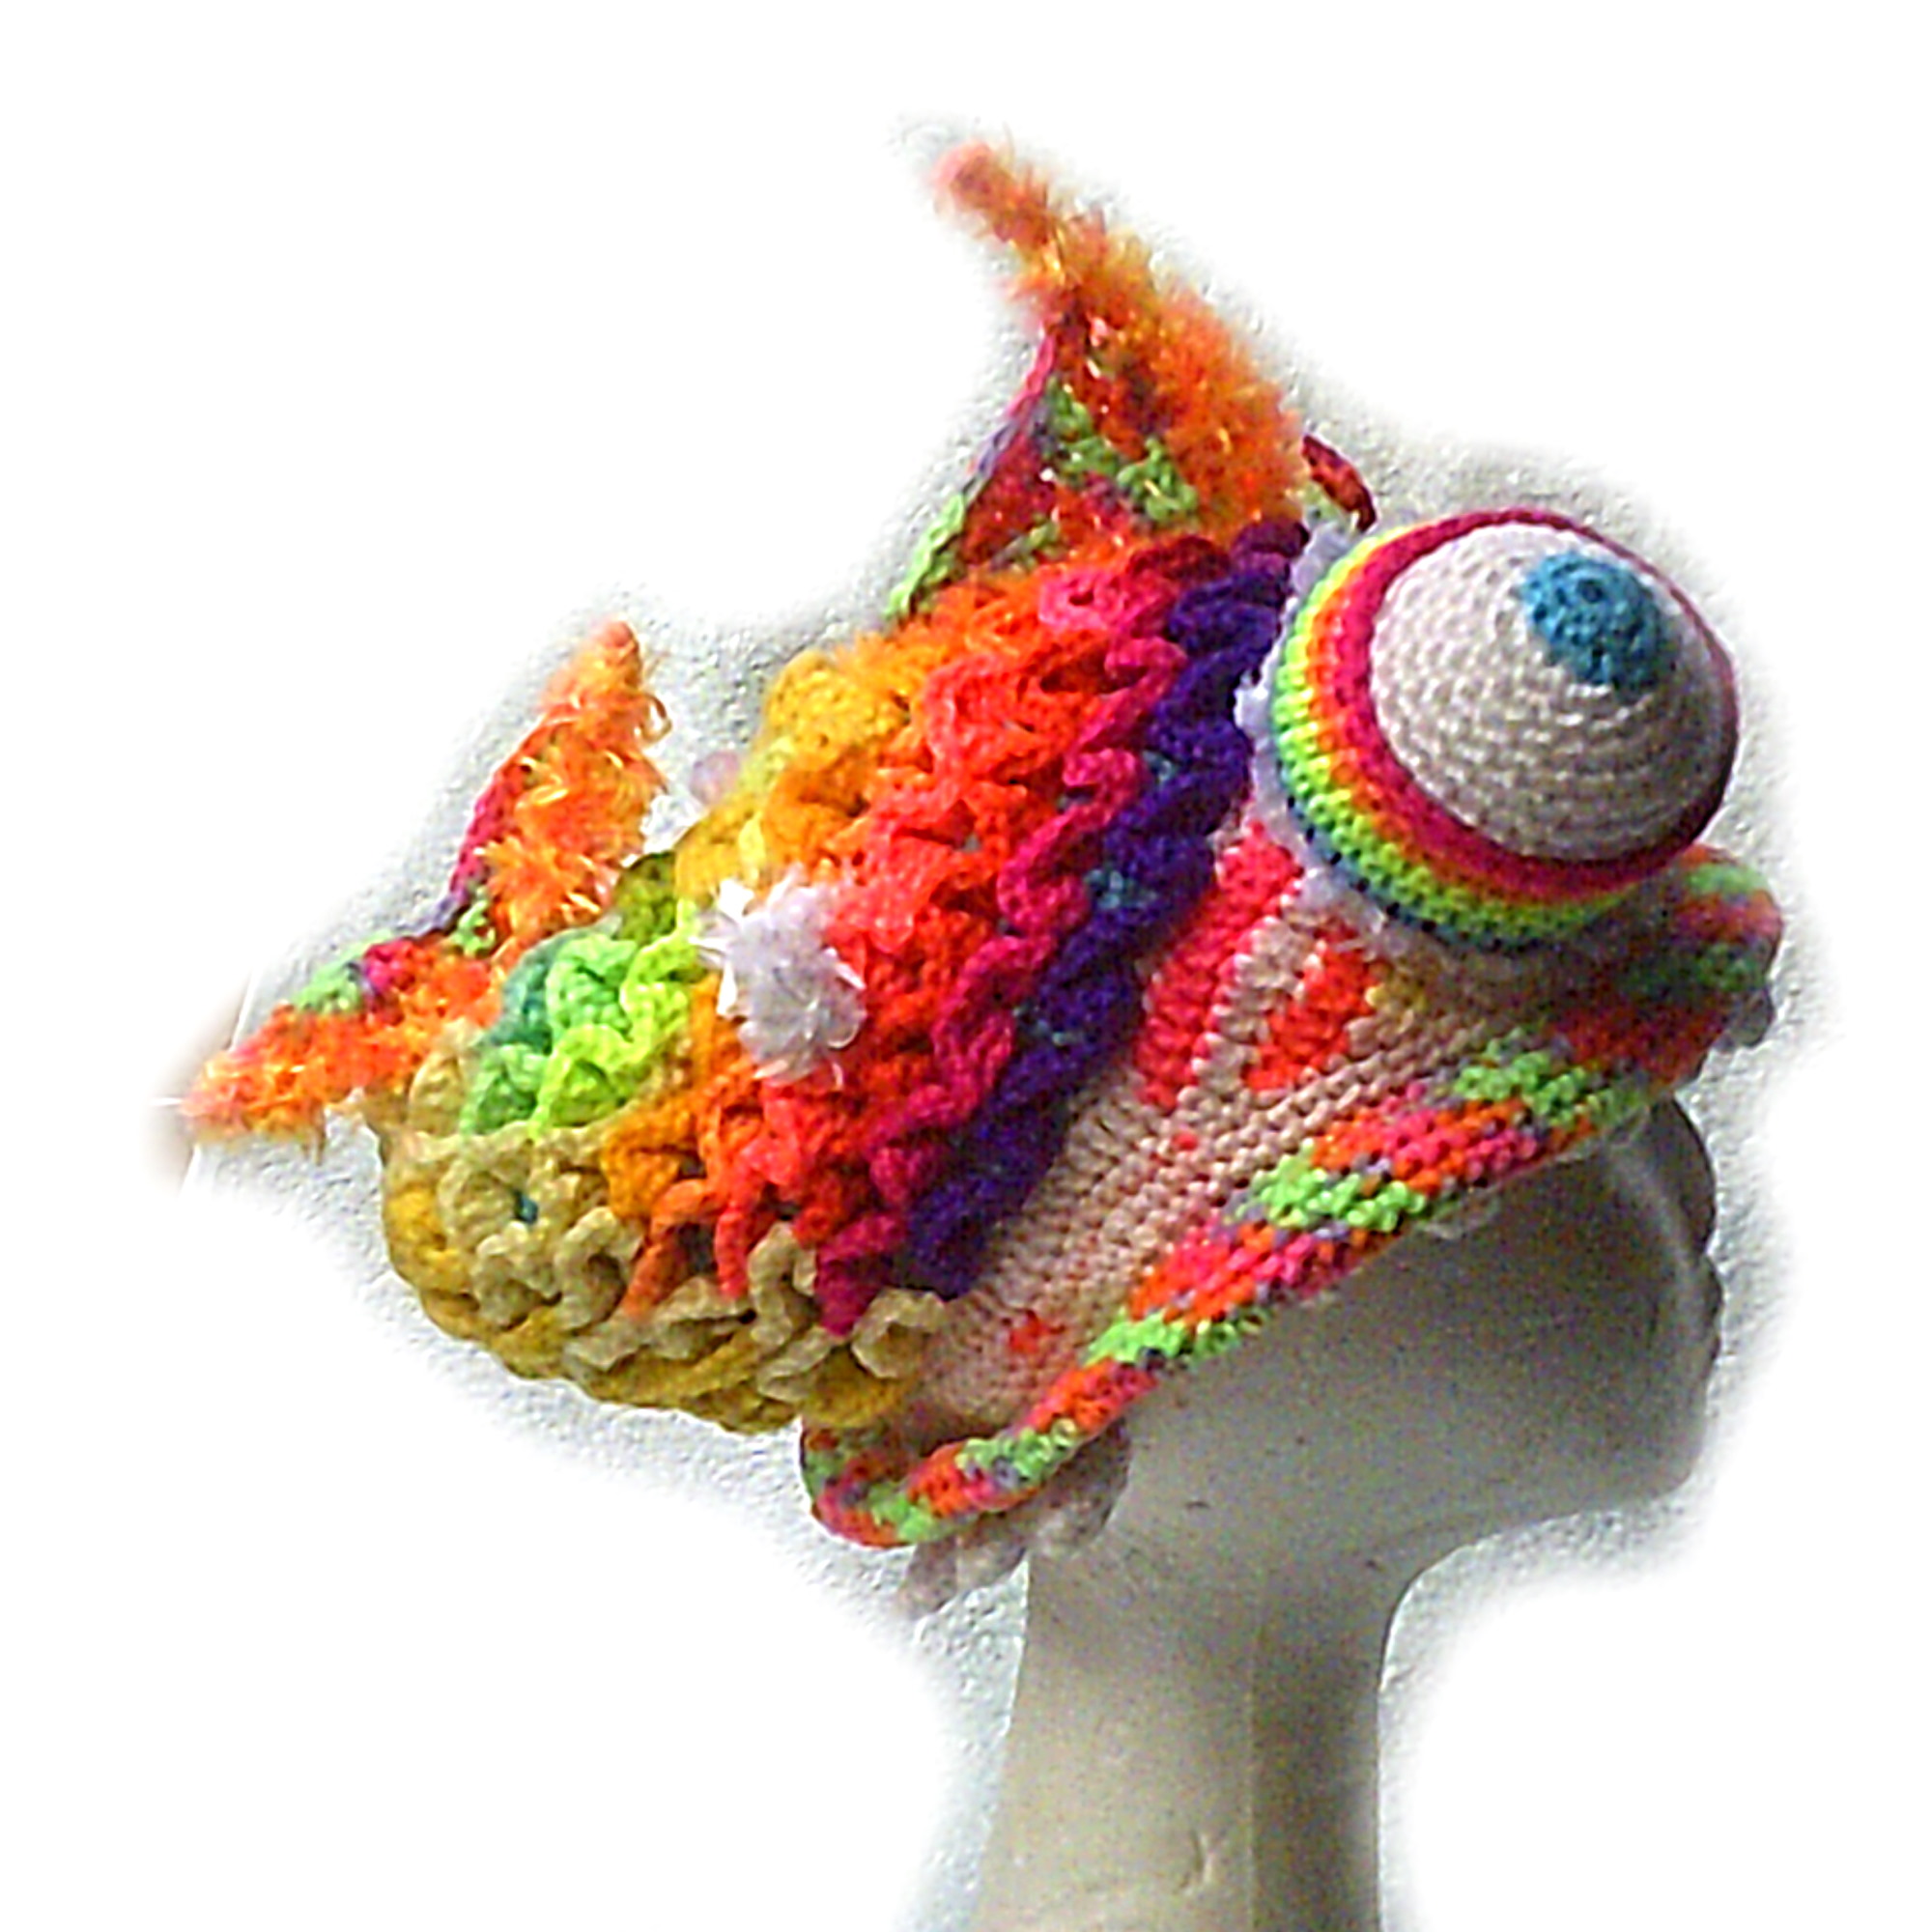 Yellow bellied toothy fluoro rainbow crochet fish hat- Oscar